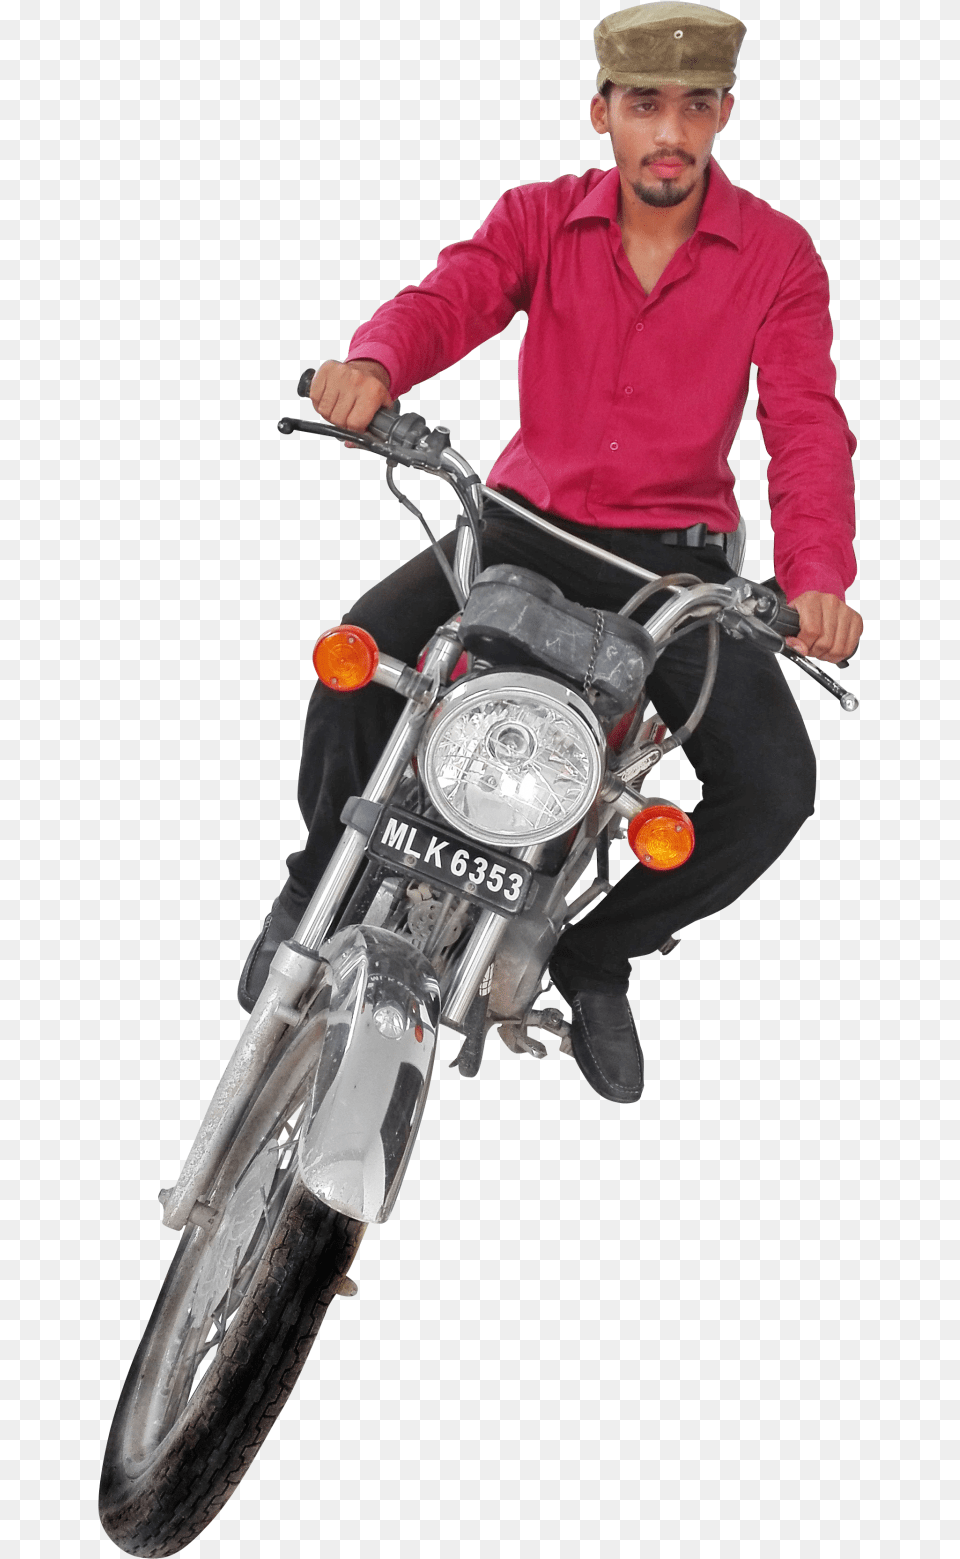 Motorcycle Cut Out, Vehicle, Transportation, Spoke, Machine Png Image